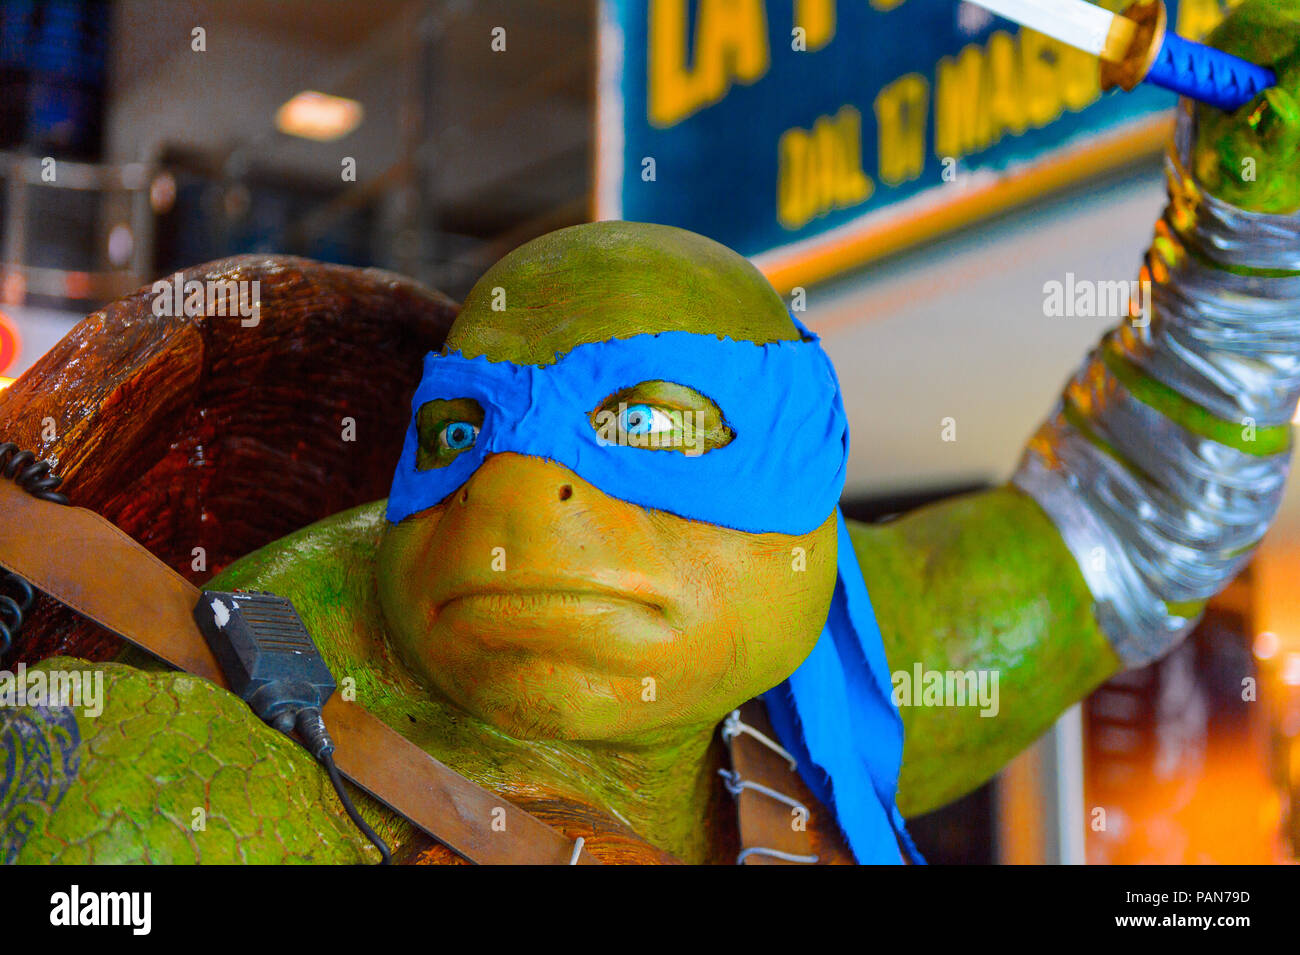 Leonardo in TEENAGE MUTANT NINJA TURTLES, from Paramount Pictures and  Nickelodeon Movies Stock Photo - Alamy